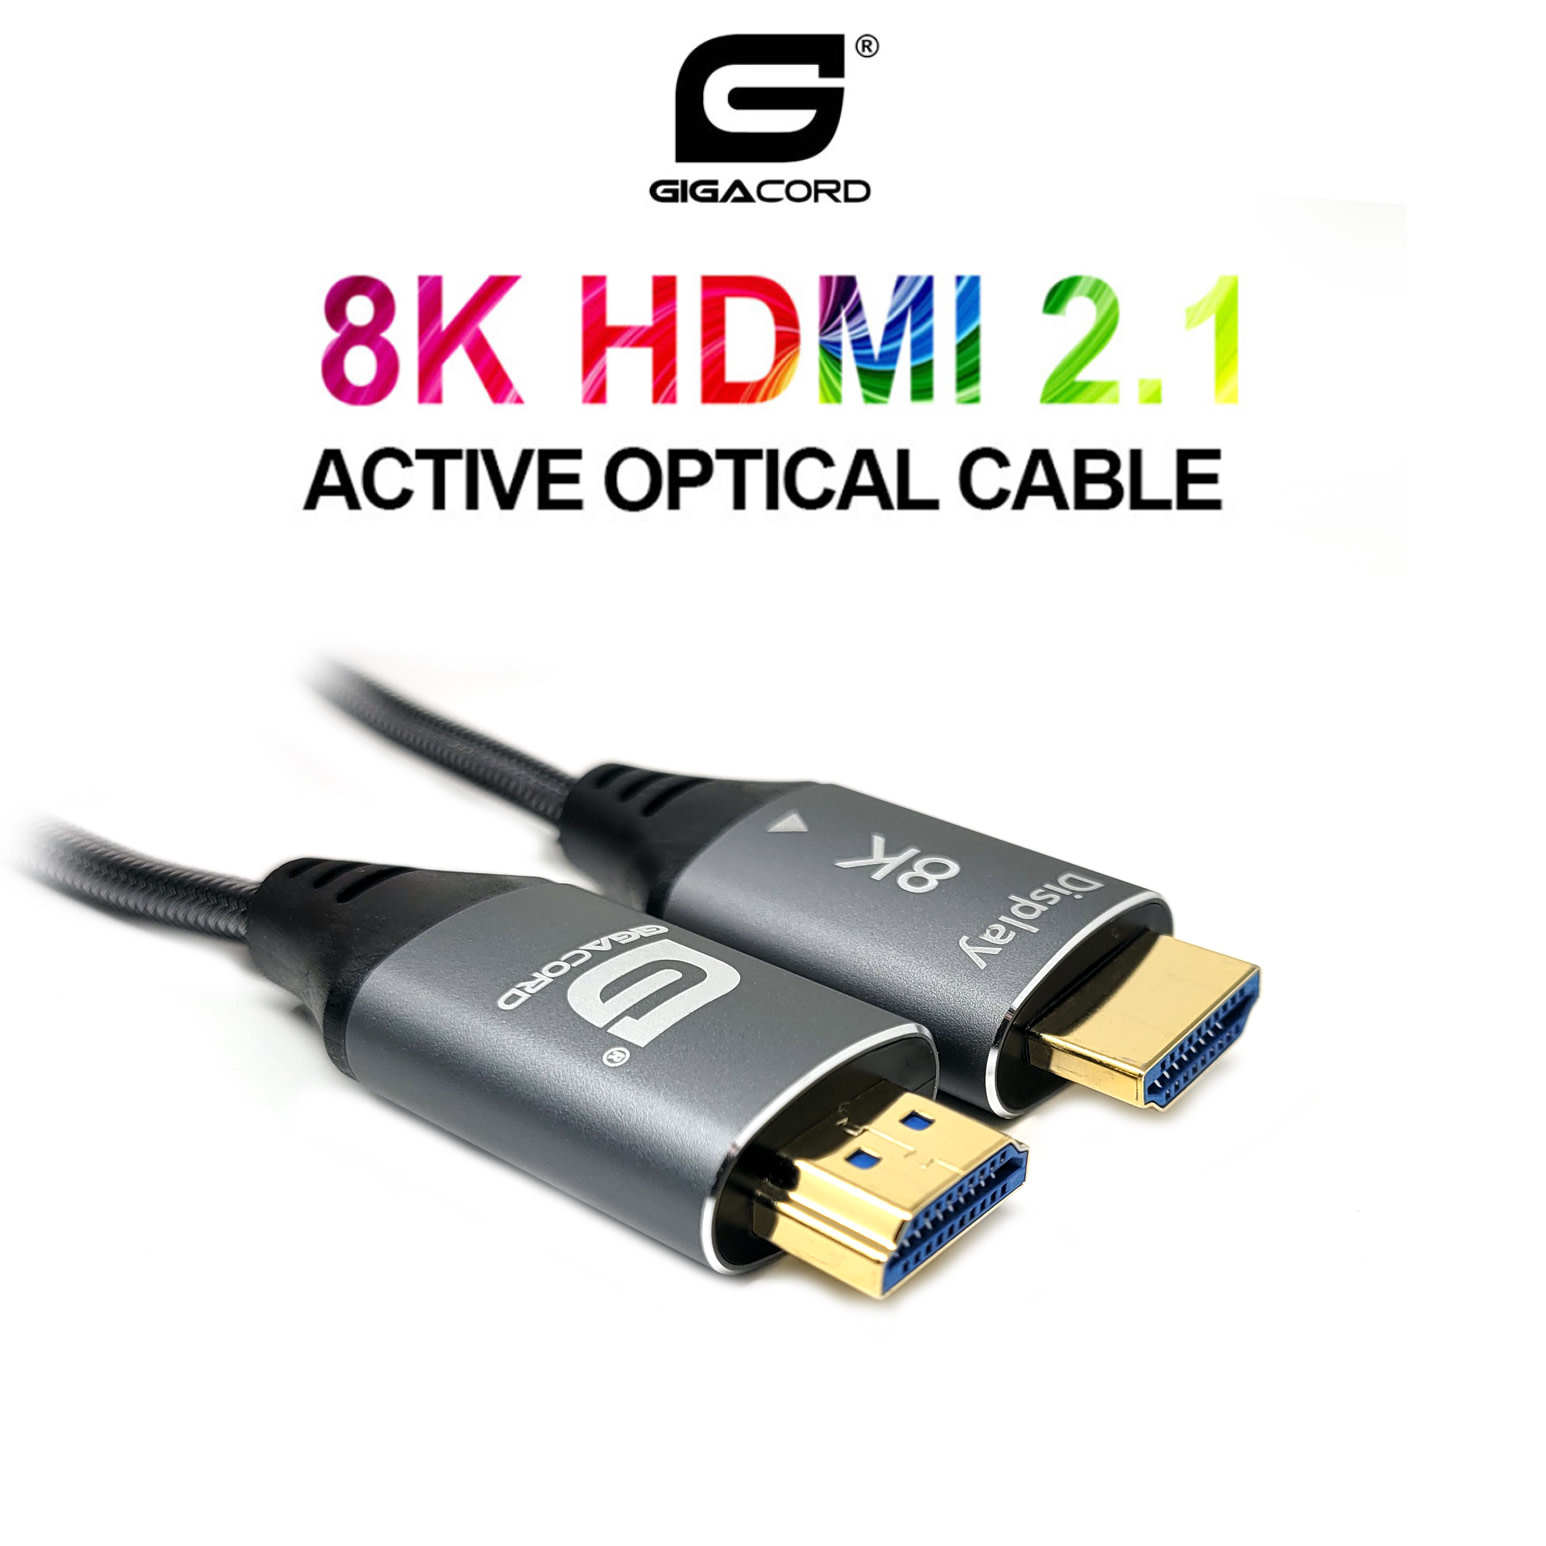 Gigacord 8K HDMI 2.1 AOC Fiber Cable HDMI 2.1 48Gbps 8K@60Hz 4K